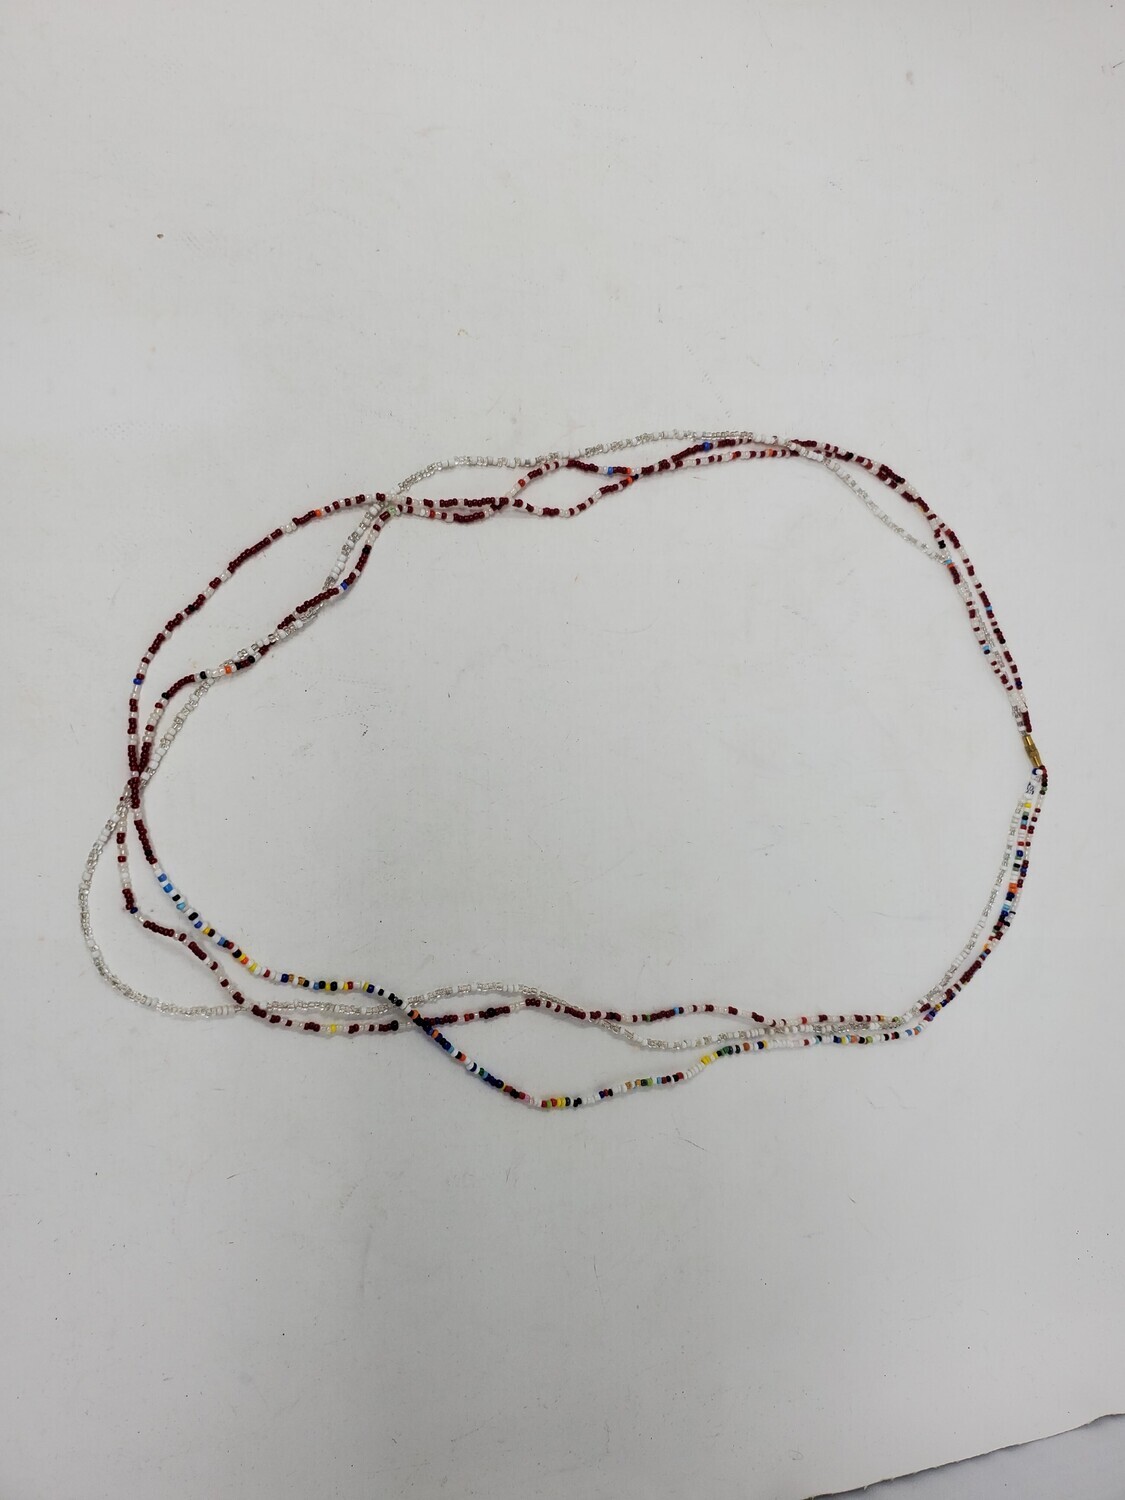 3 in 1 Handbeaded African Waist Beads - Size 33" / 83.8cm